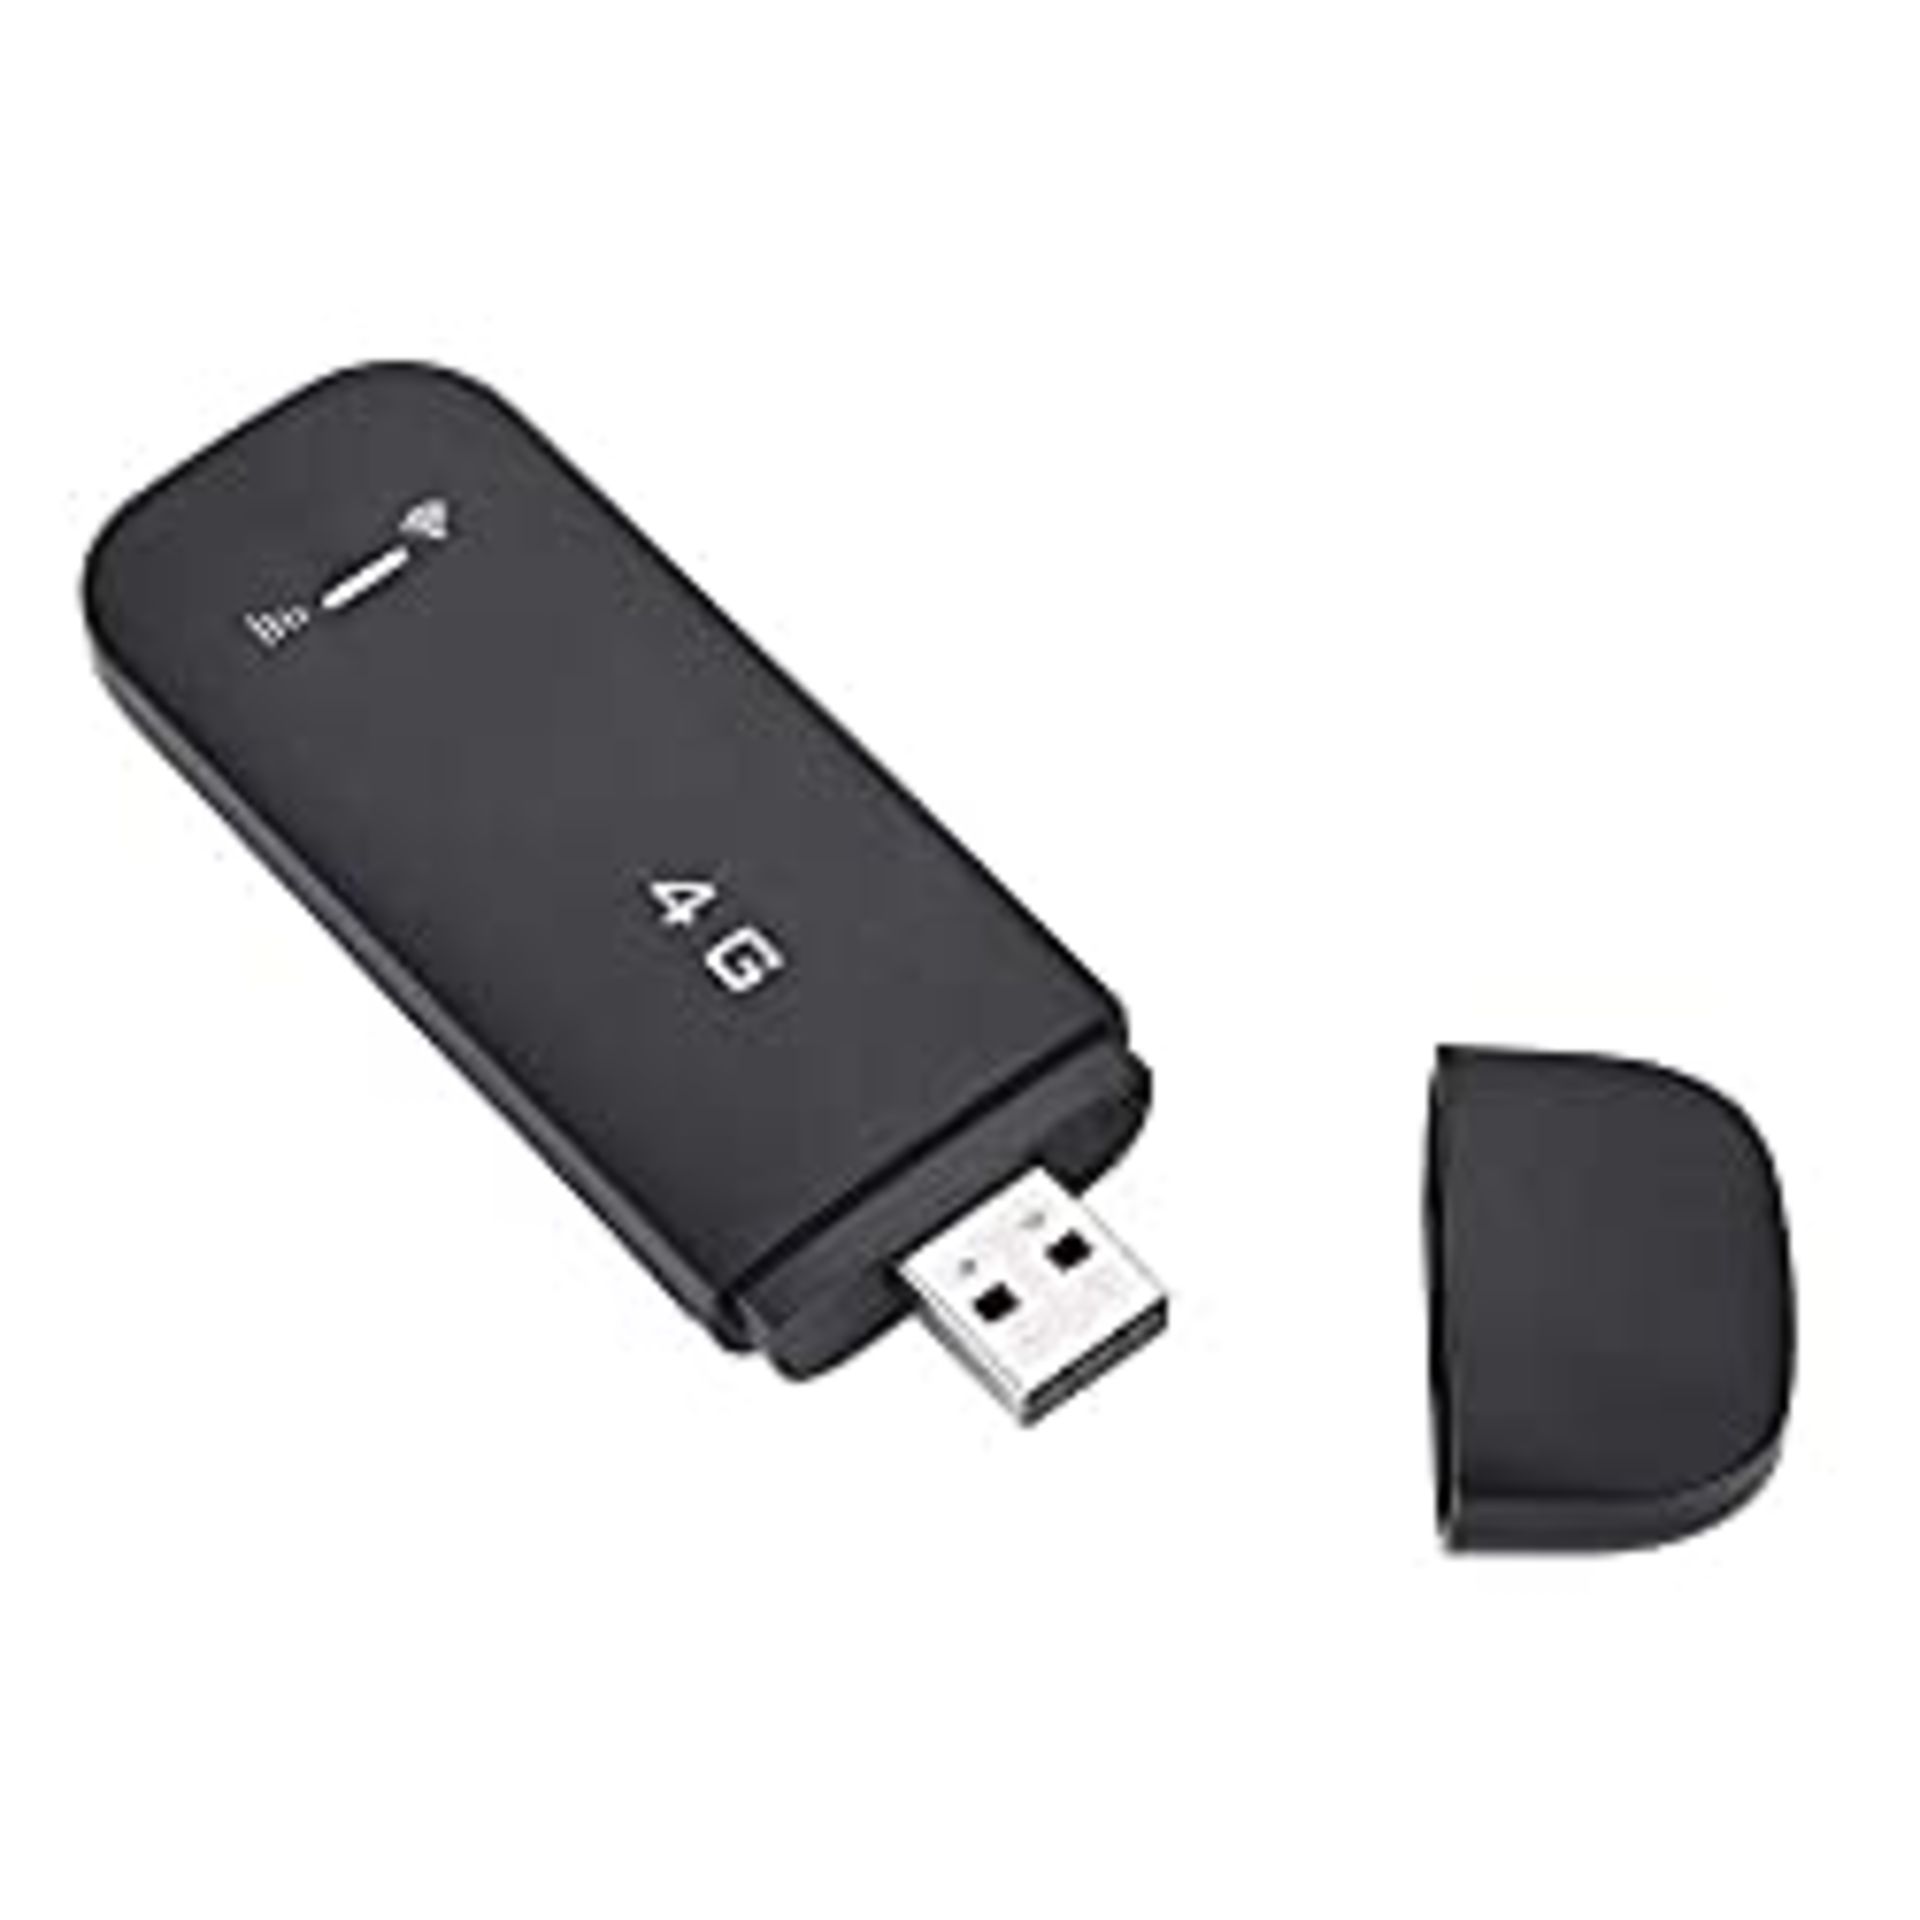 RRP £18.13 ASHATA 4G LTE USB Portable WiFi Router Pocket Mobile